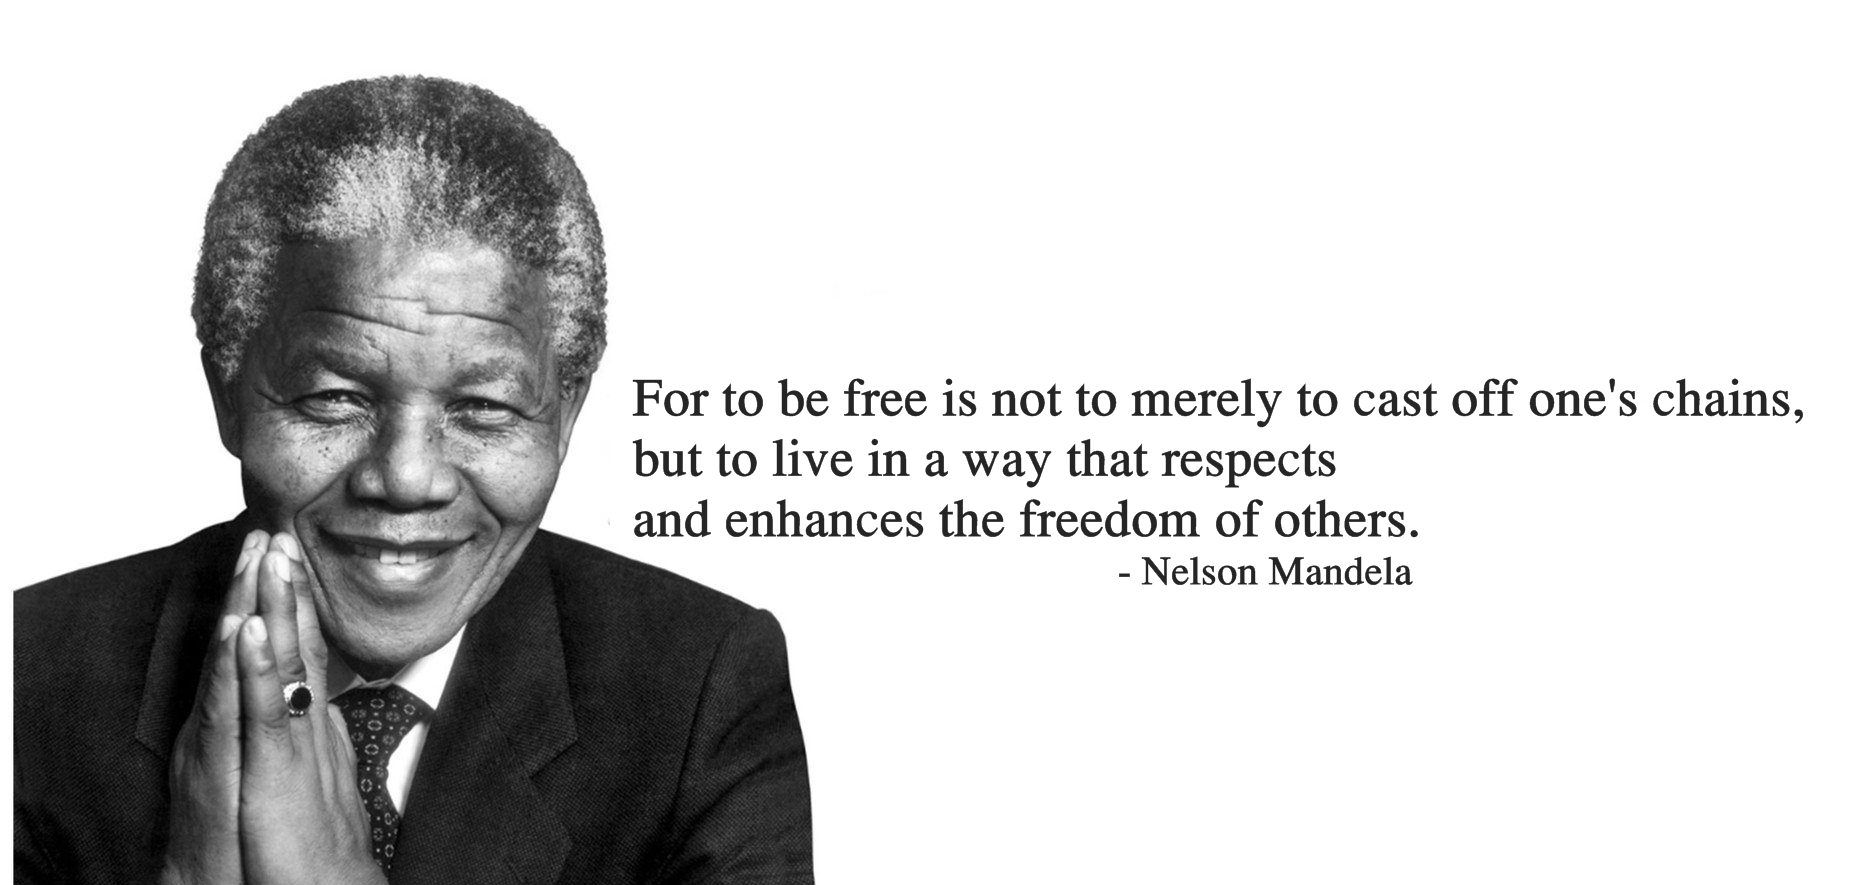 Download 1865x885 Nelson Mandela Quotes HD Wallpaper